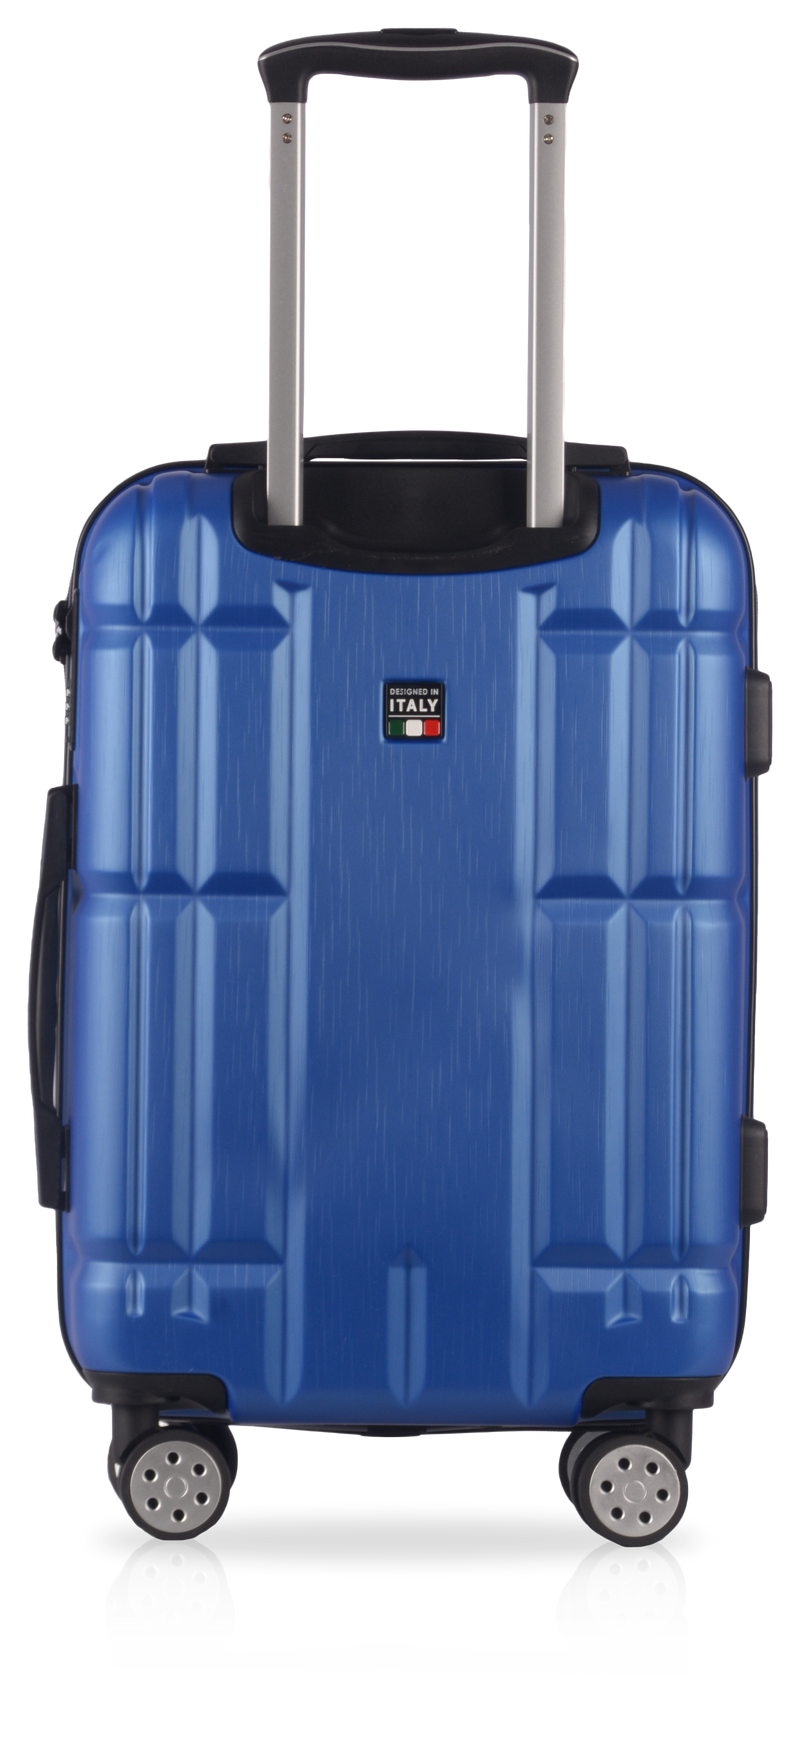 TUCCI Italy MASSA 30" Durable Lightweight Suitcase